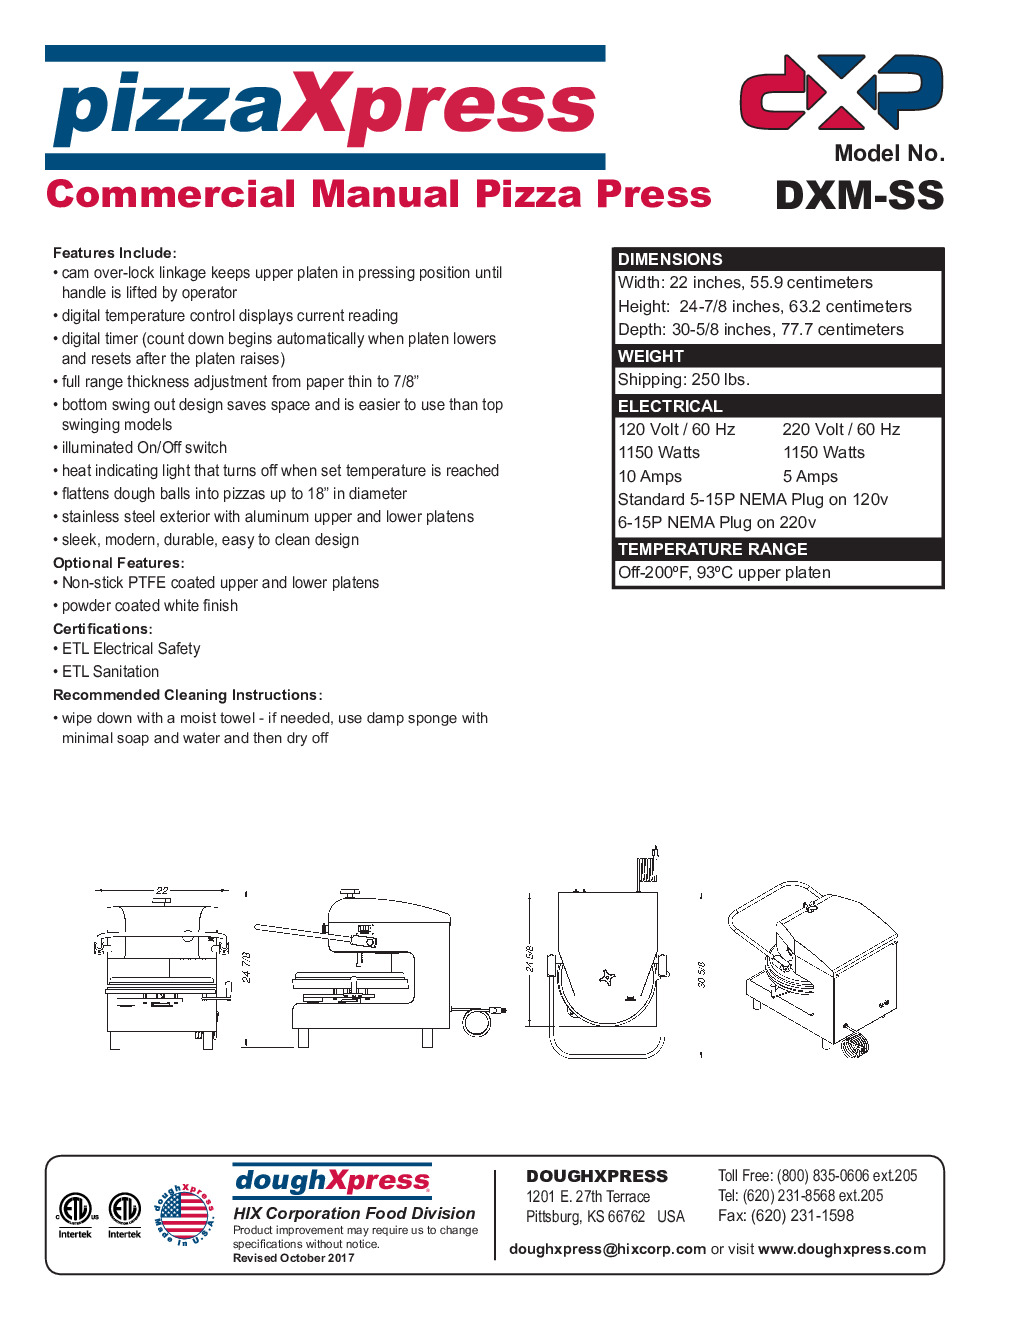 DoughXpress DXM-SS-220 18